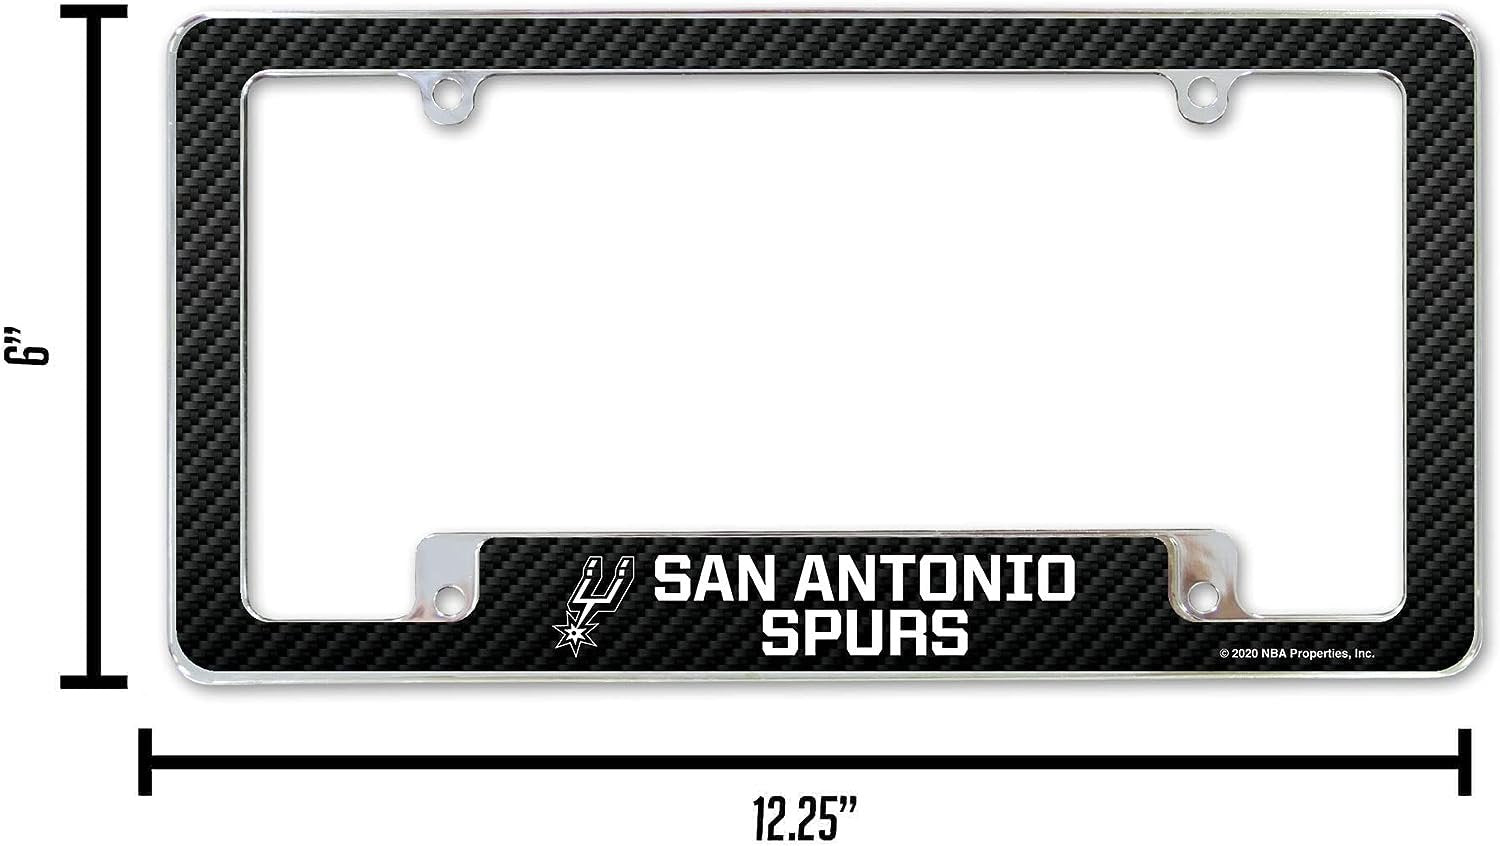 San Antonio Spurs Metal License Plate Frame Tag Cover, Carbon Fiber Design, 6x12 Inch